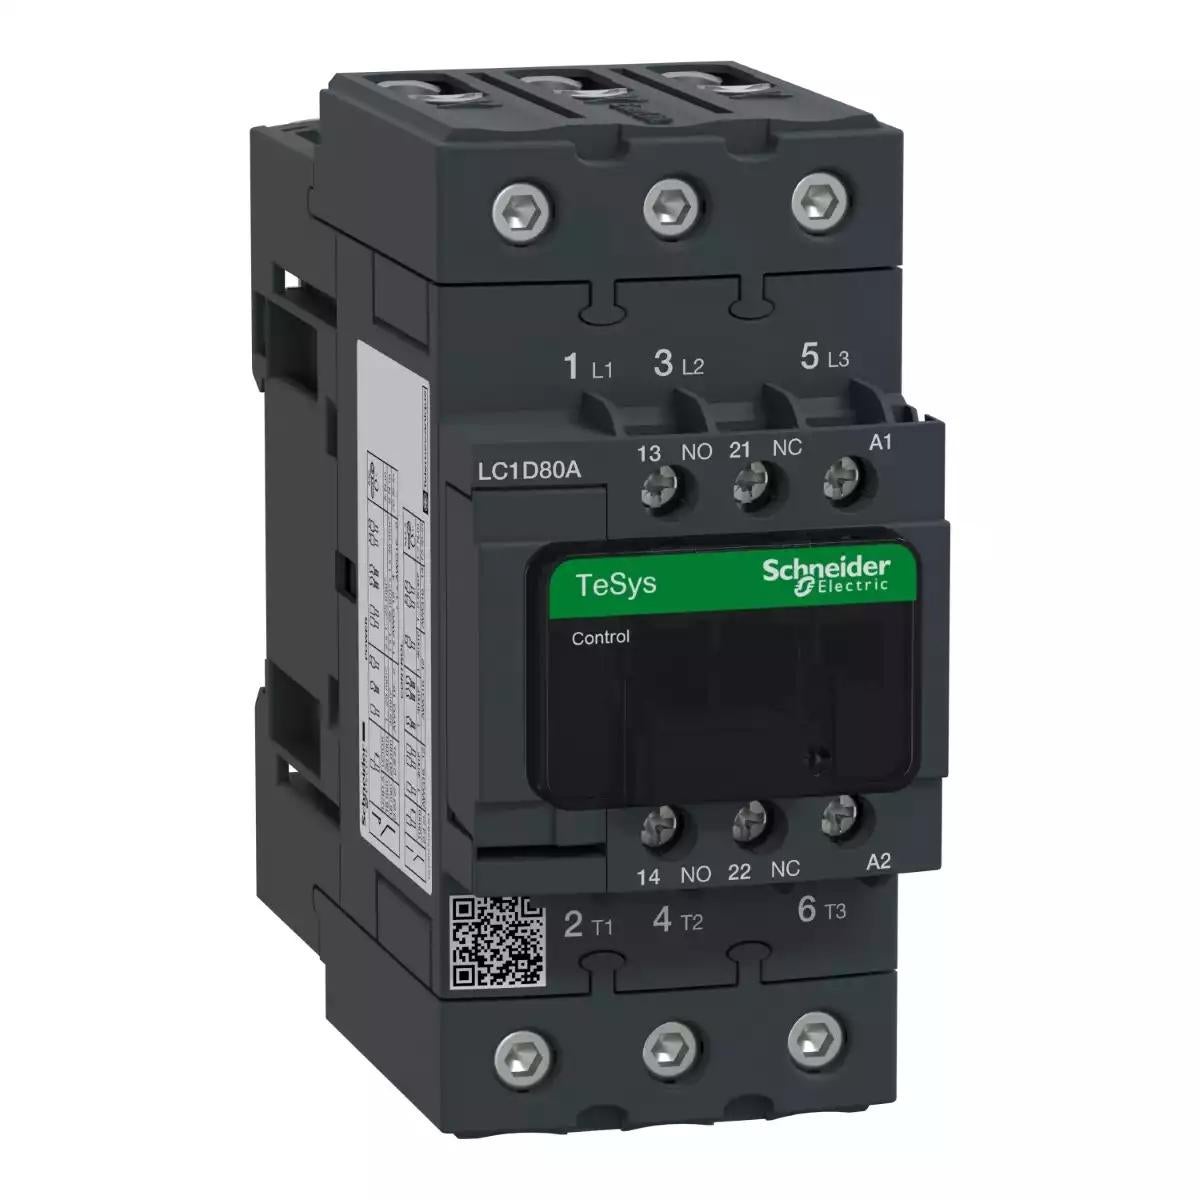 TeSys D contactor 3P 66A AC-3 up to 440V coil 120V AC 60 Hz